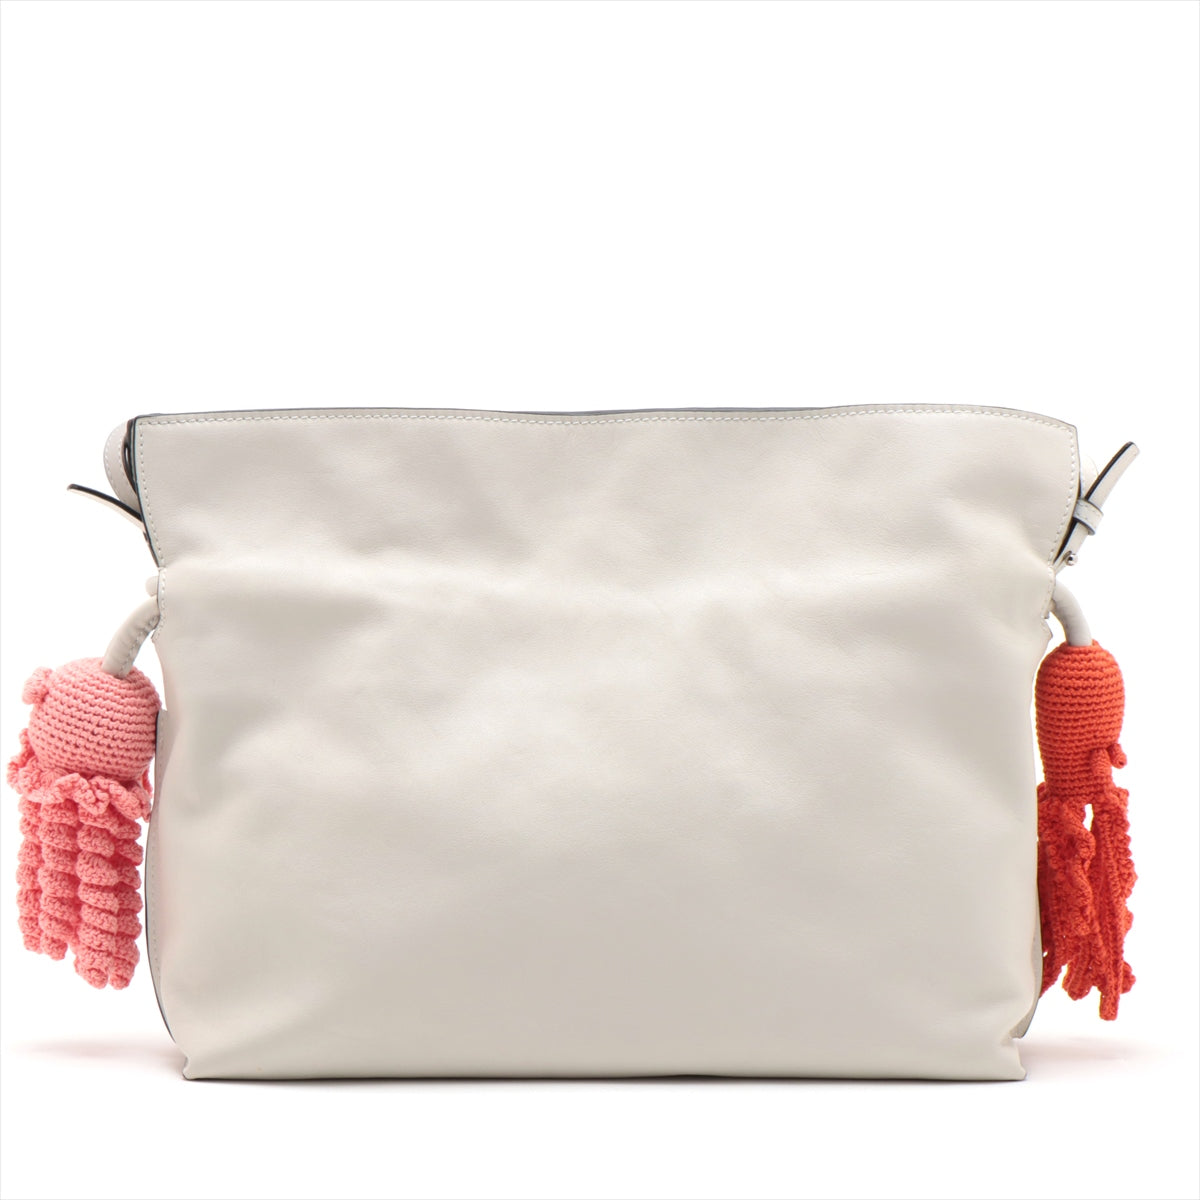 Loewe Flamenco clutch Leather Shoulder bag White octopus